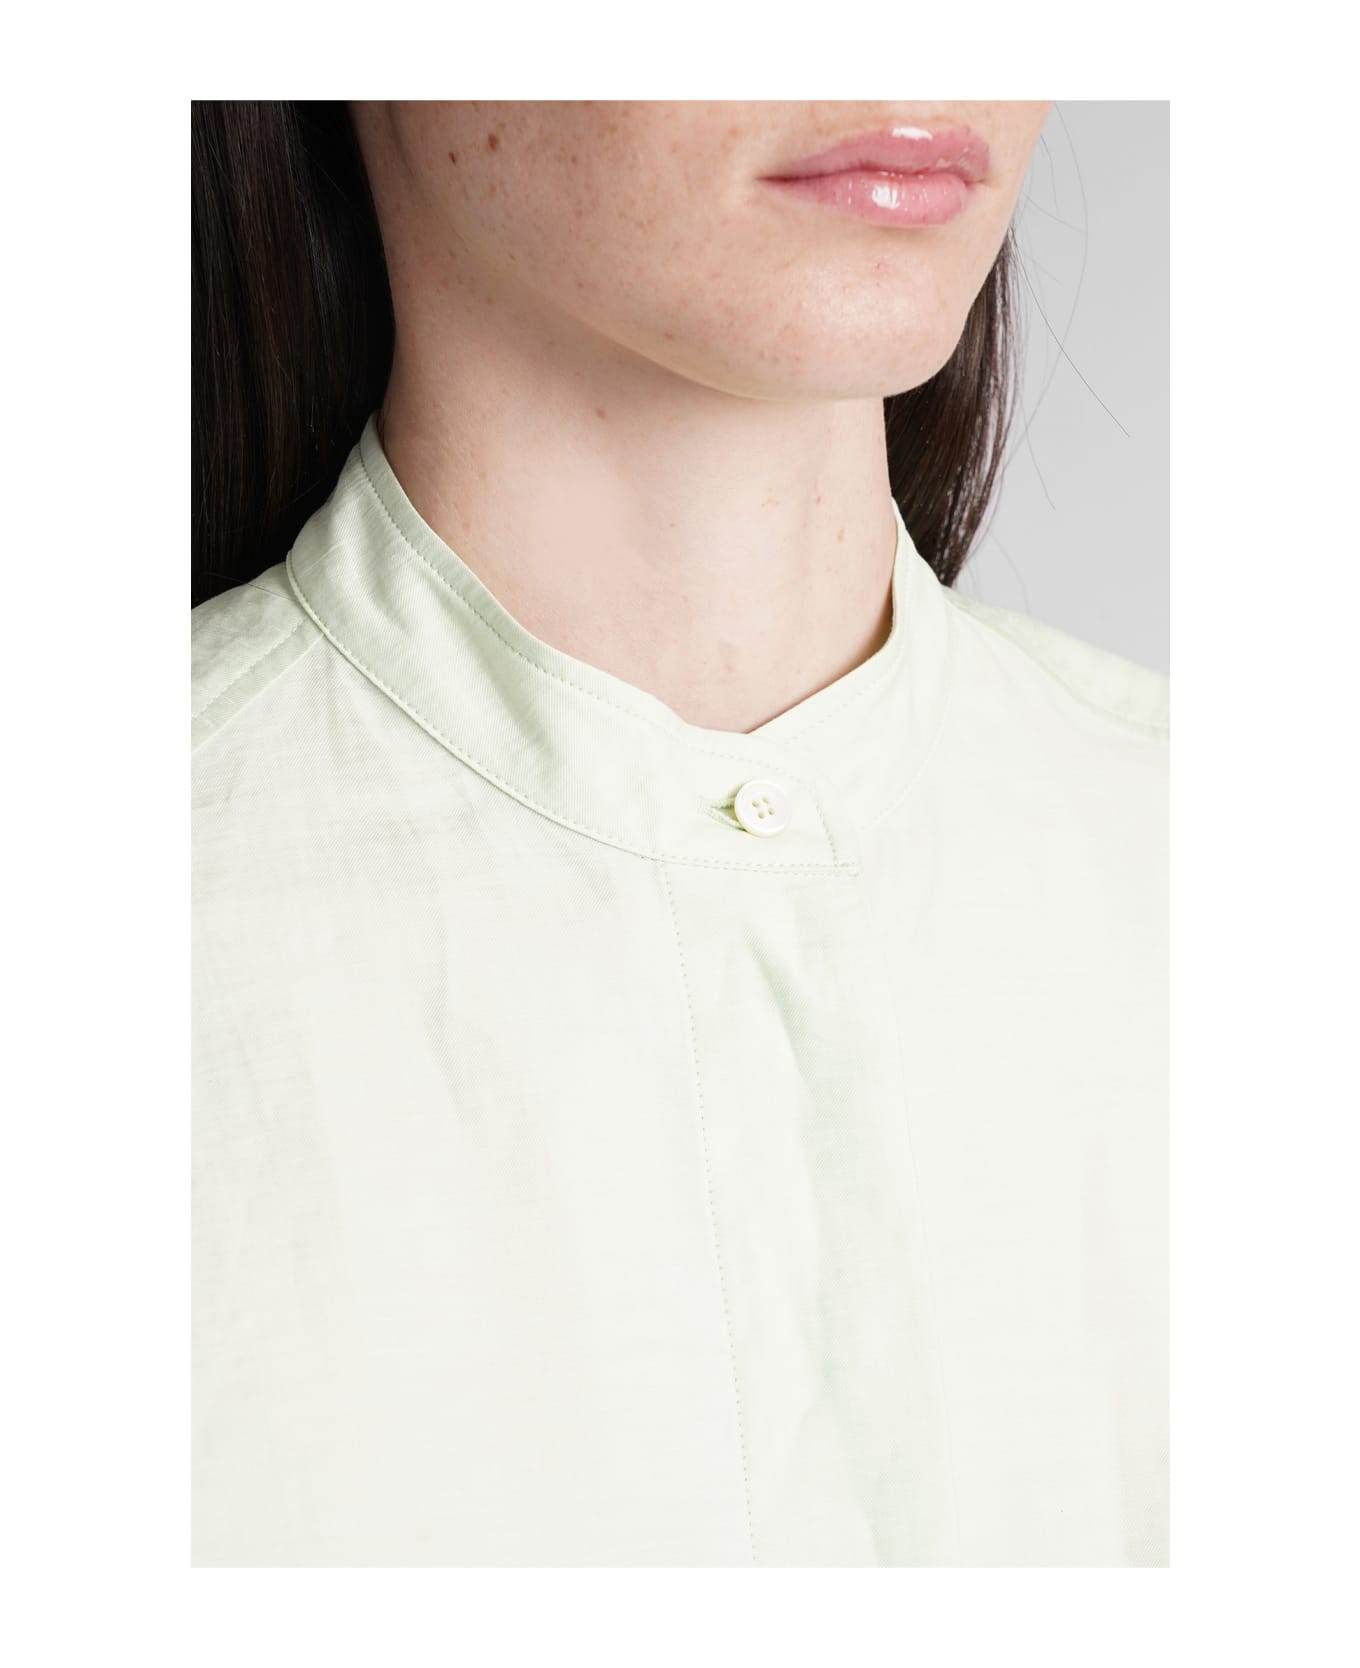 Stella McCartney Shirt In Green Linen - green シャツ